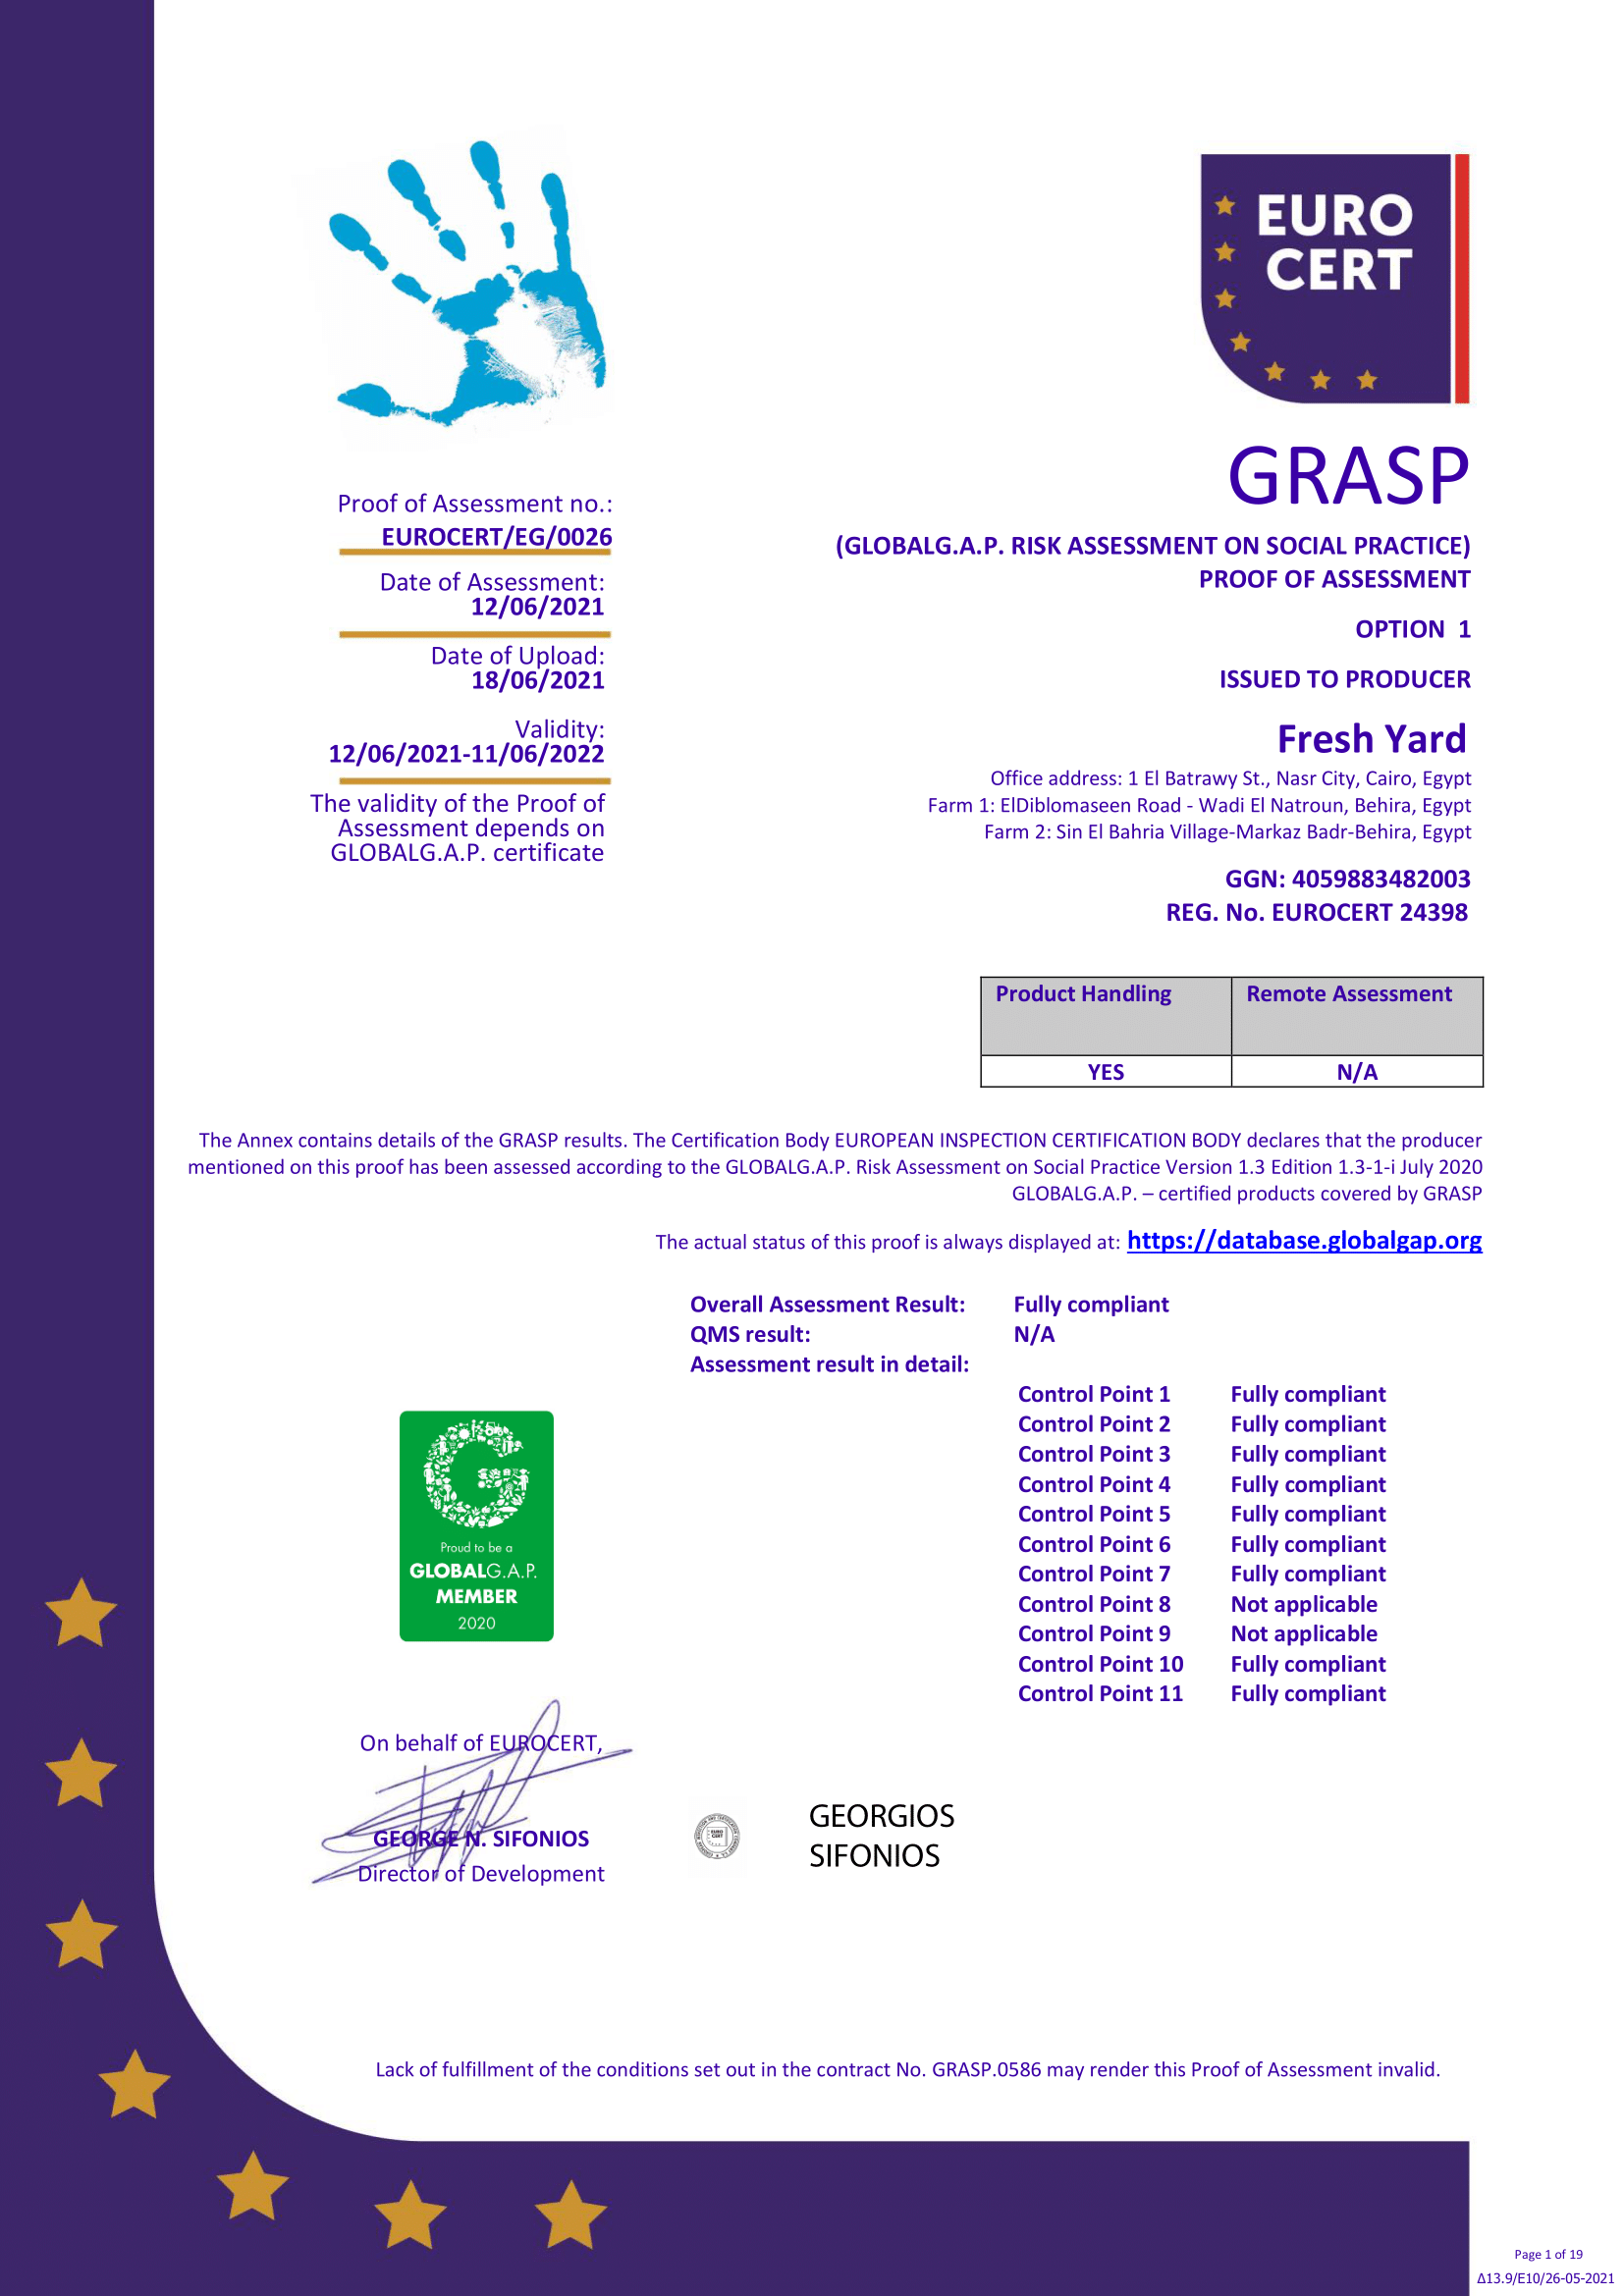 Fresh Yard Quality Certificates GRASP